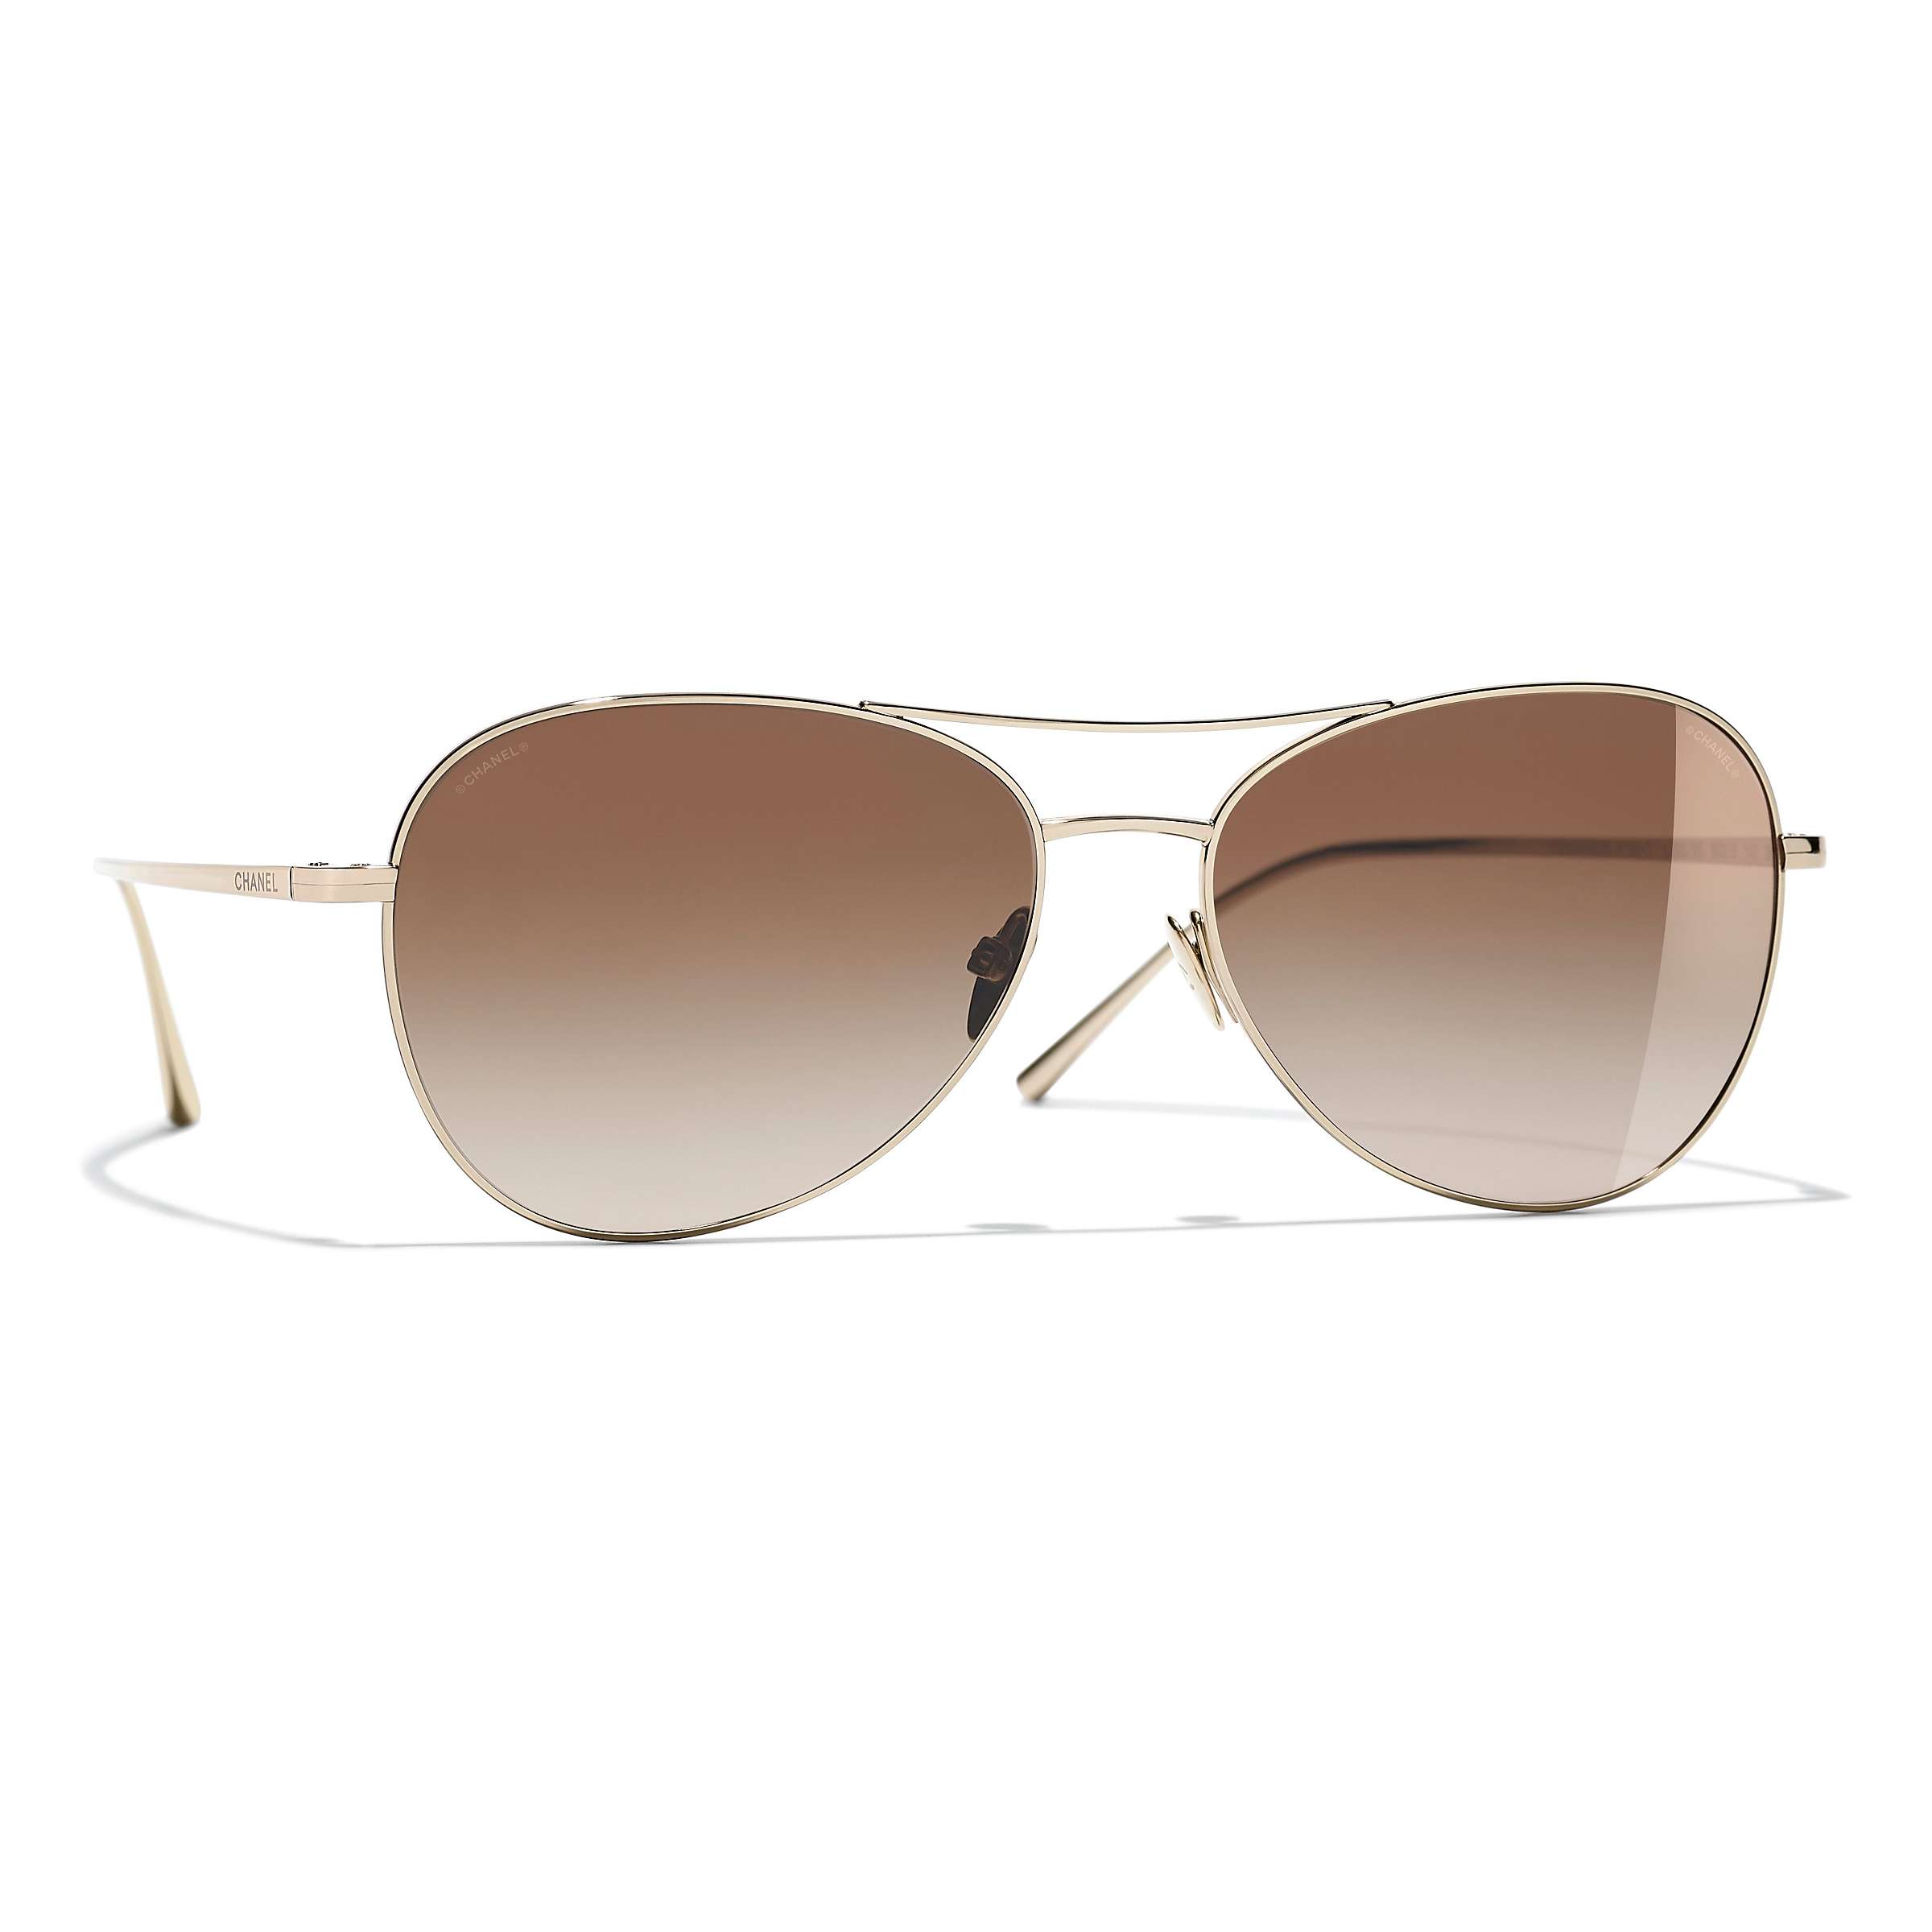 Buy CHANEL Pilot Sunglasses CH4259T, Pale Gold/Brown Online at johnlewis.com